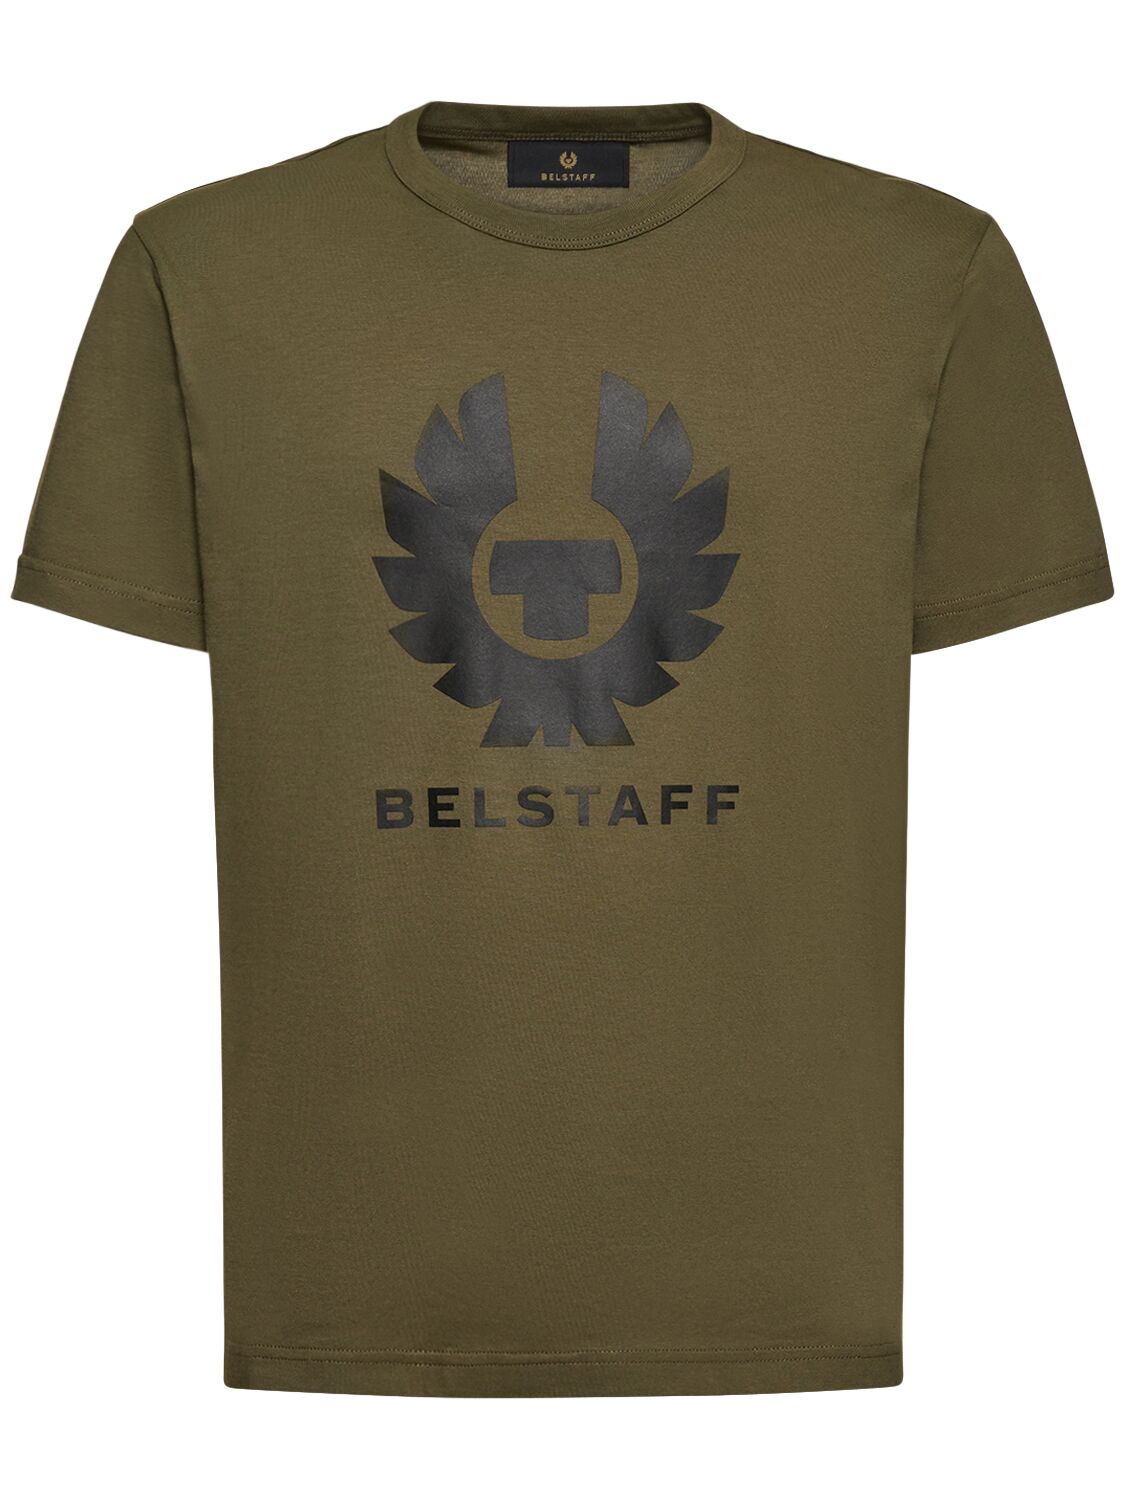 Belstaff Phoenix Cotton Jersey T-shirt In Olive Green